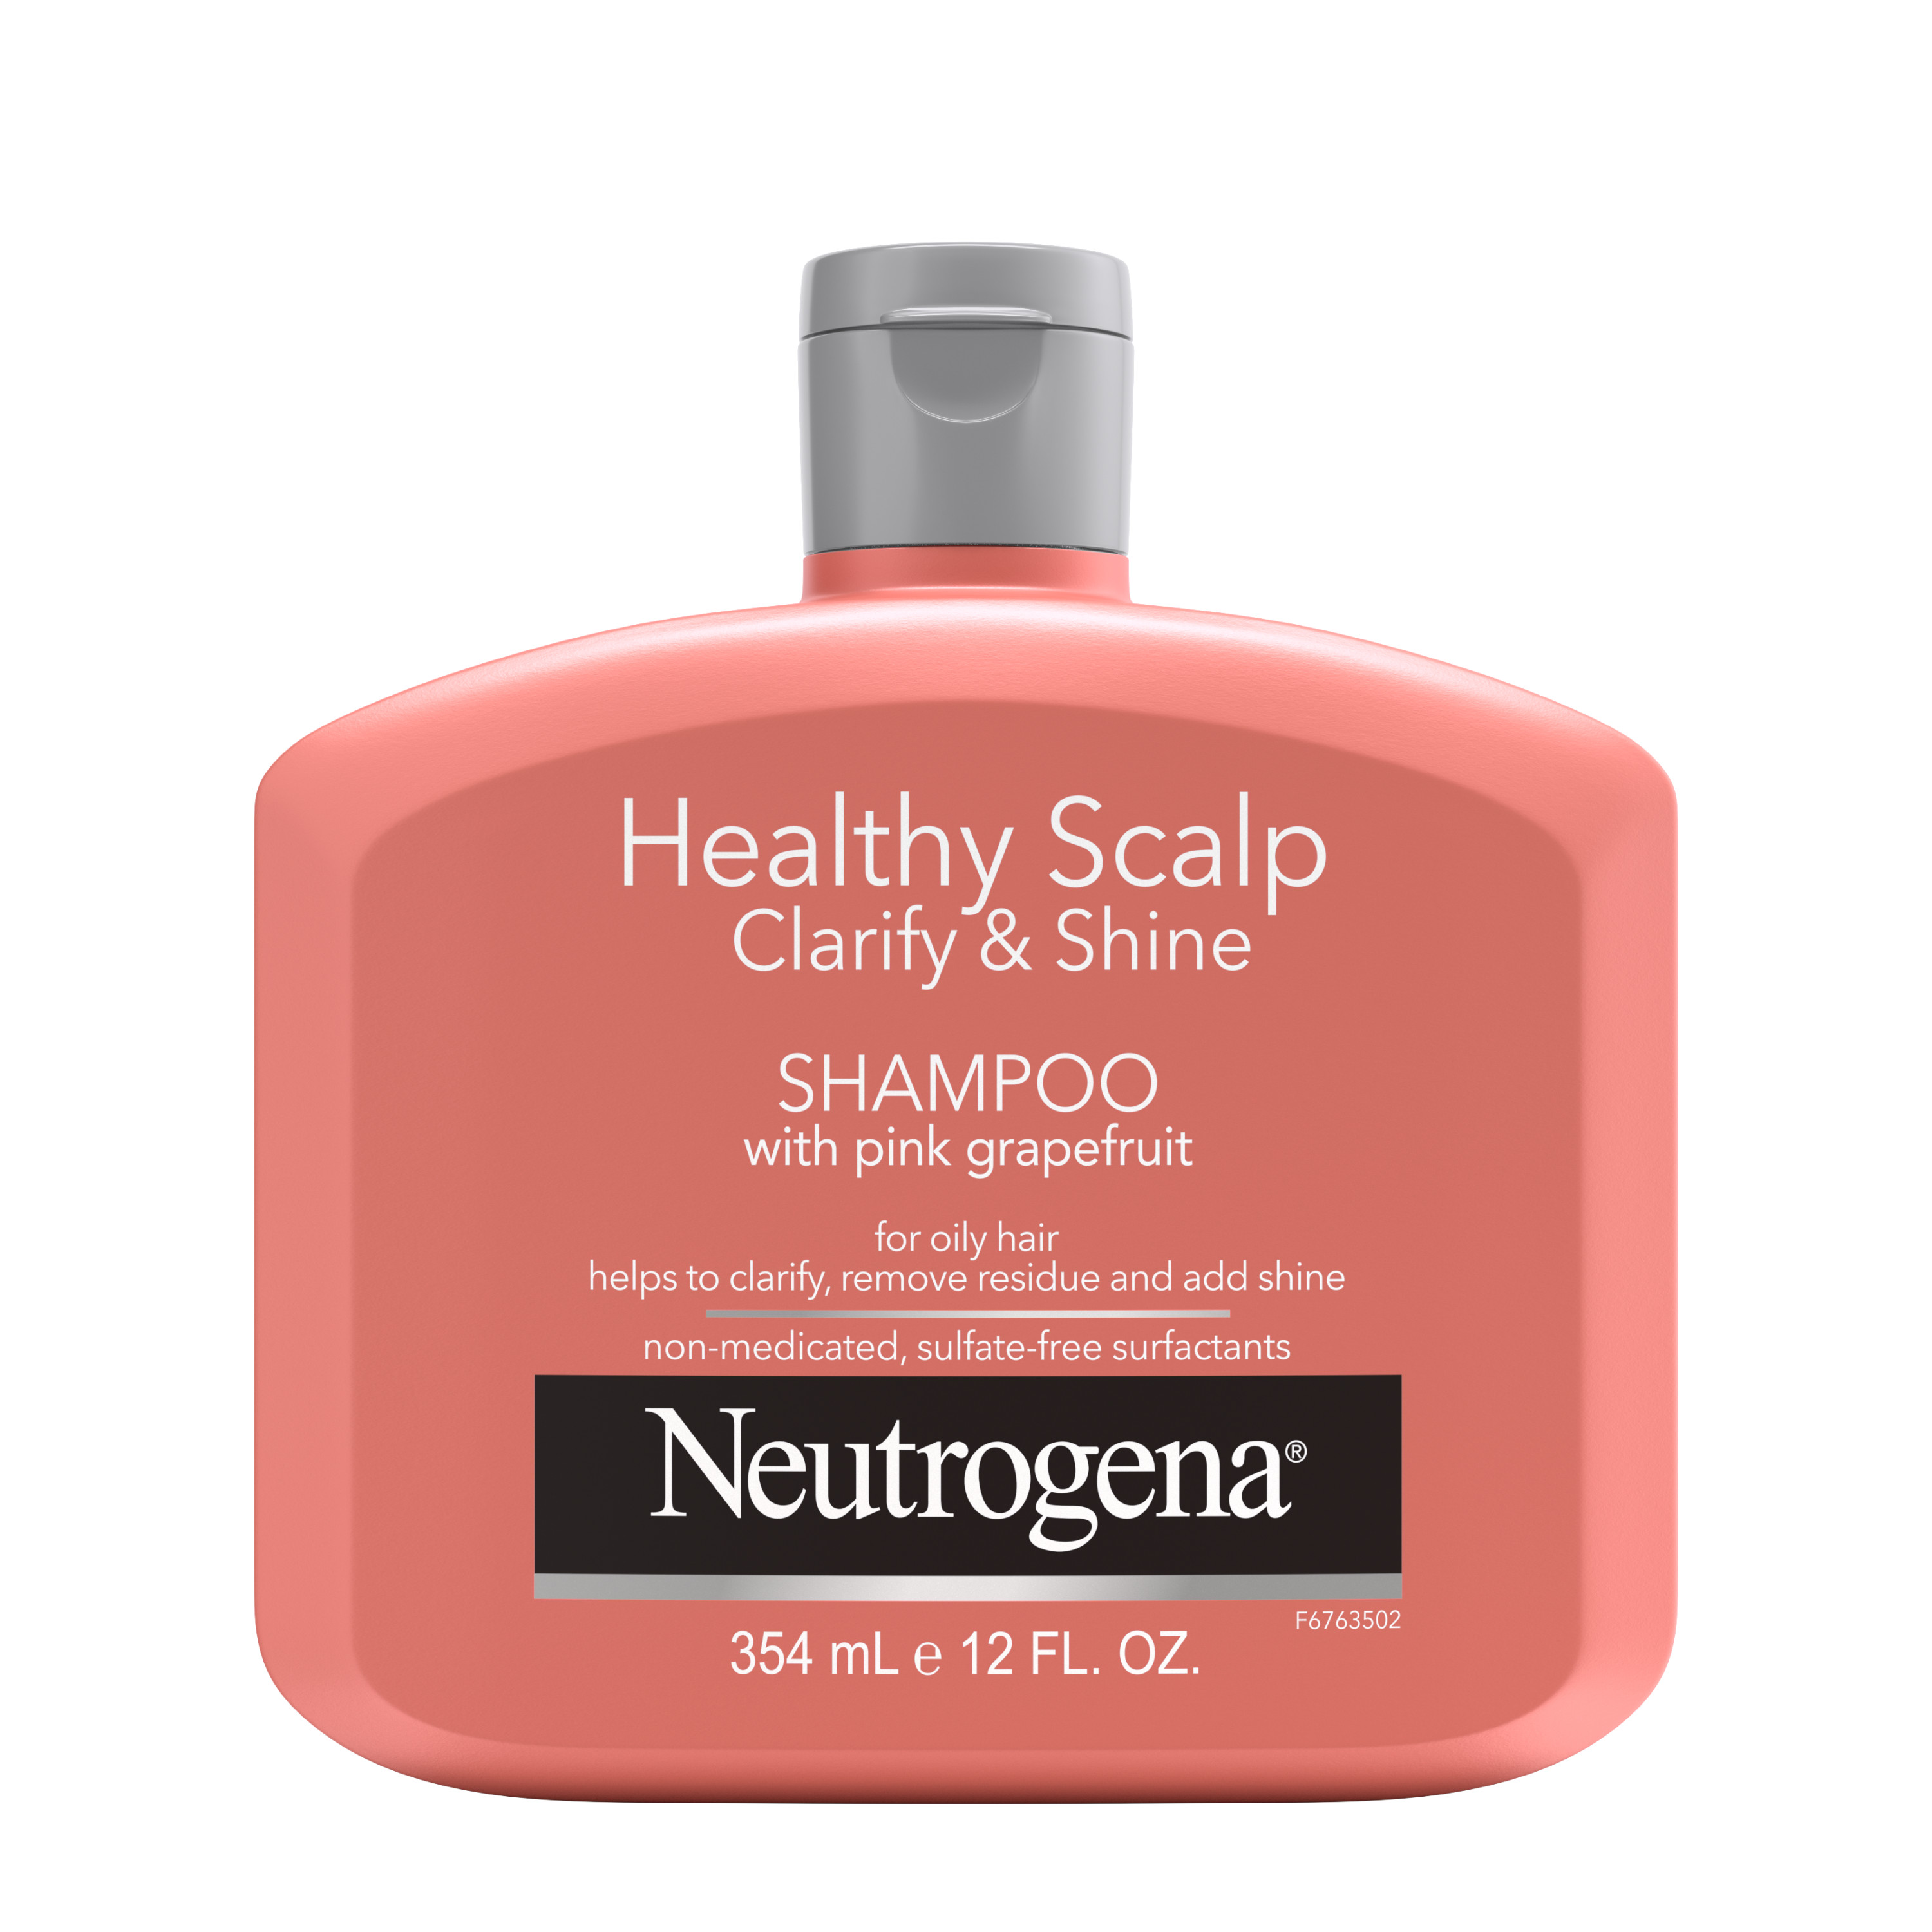 Neutrogena Exfoliating Shampoo for Oily Hair & Scalp with Pink Grapefruit, 12 fl oz - image 1 of 6